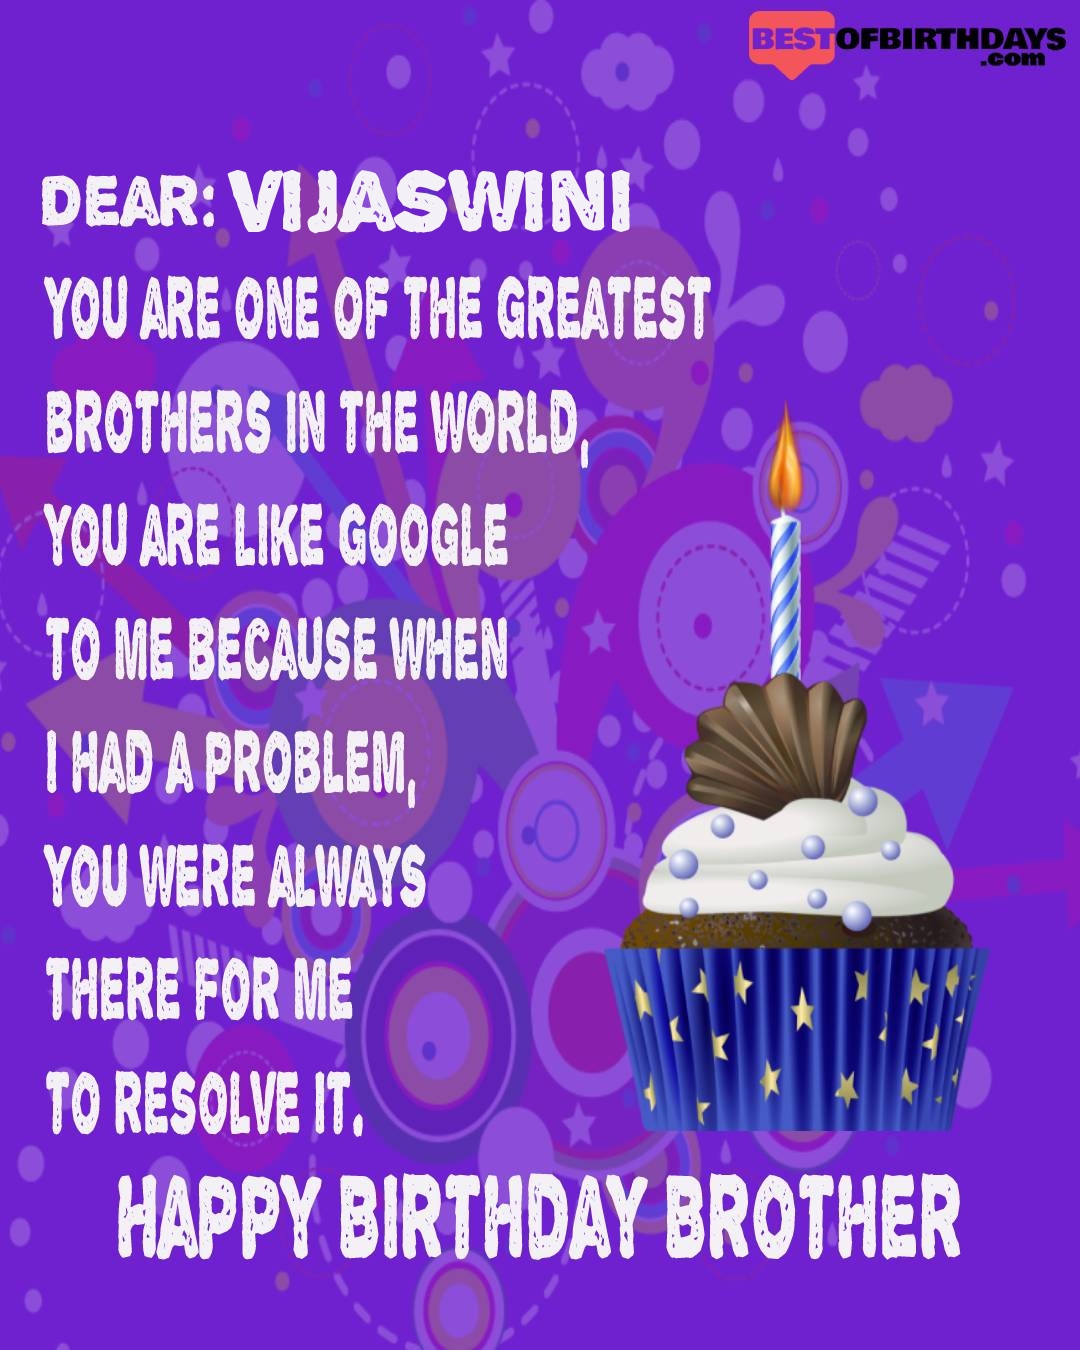 Happy birthday vijaswini bhai brother bro